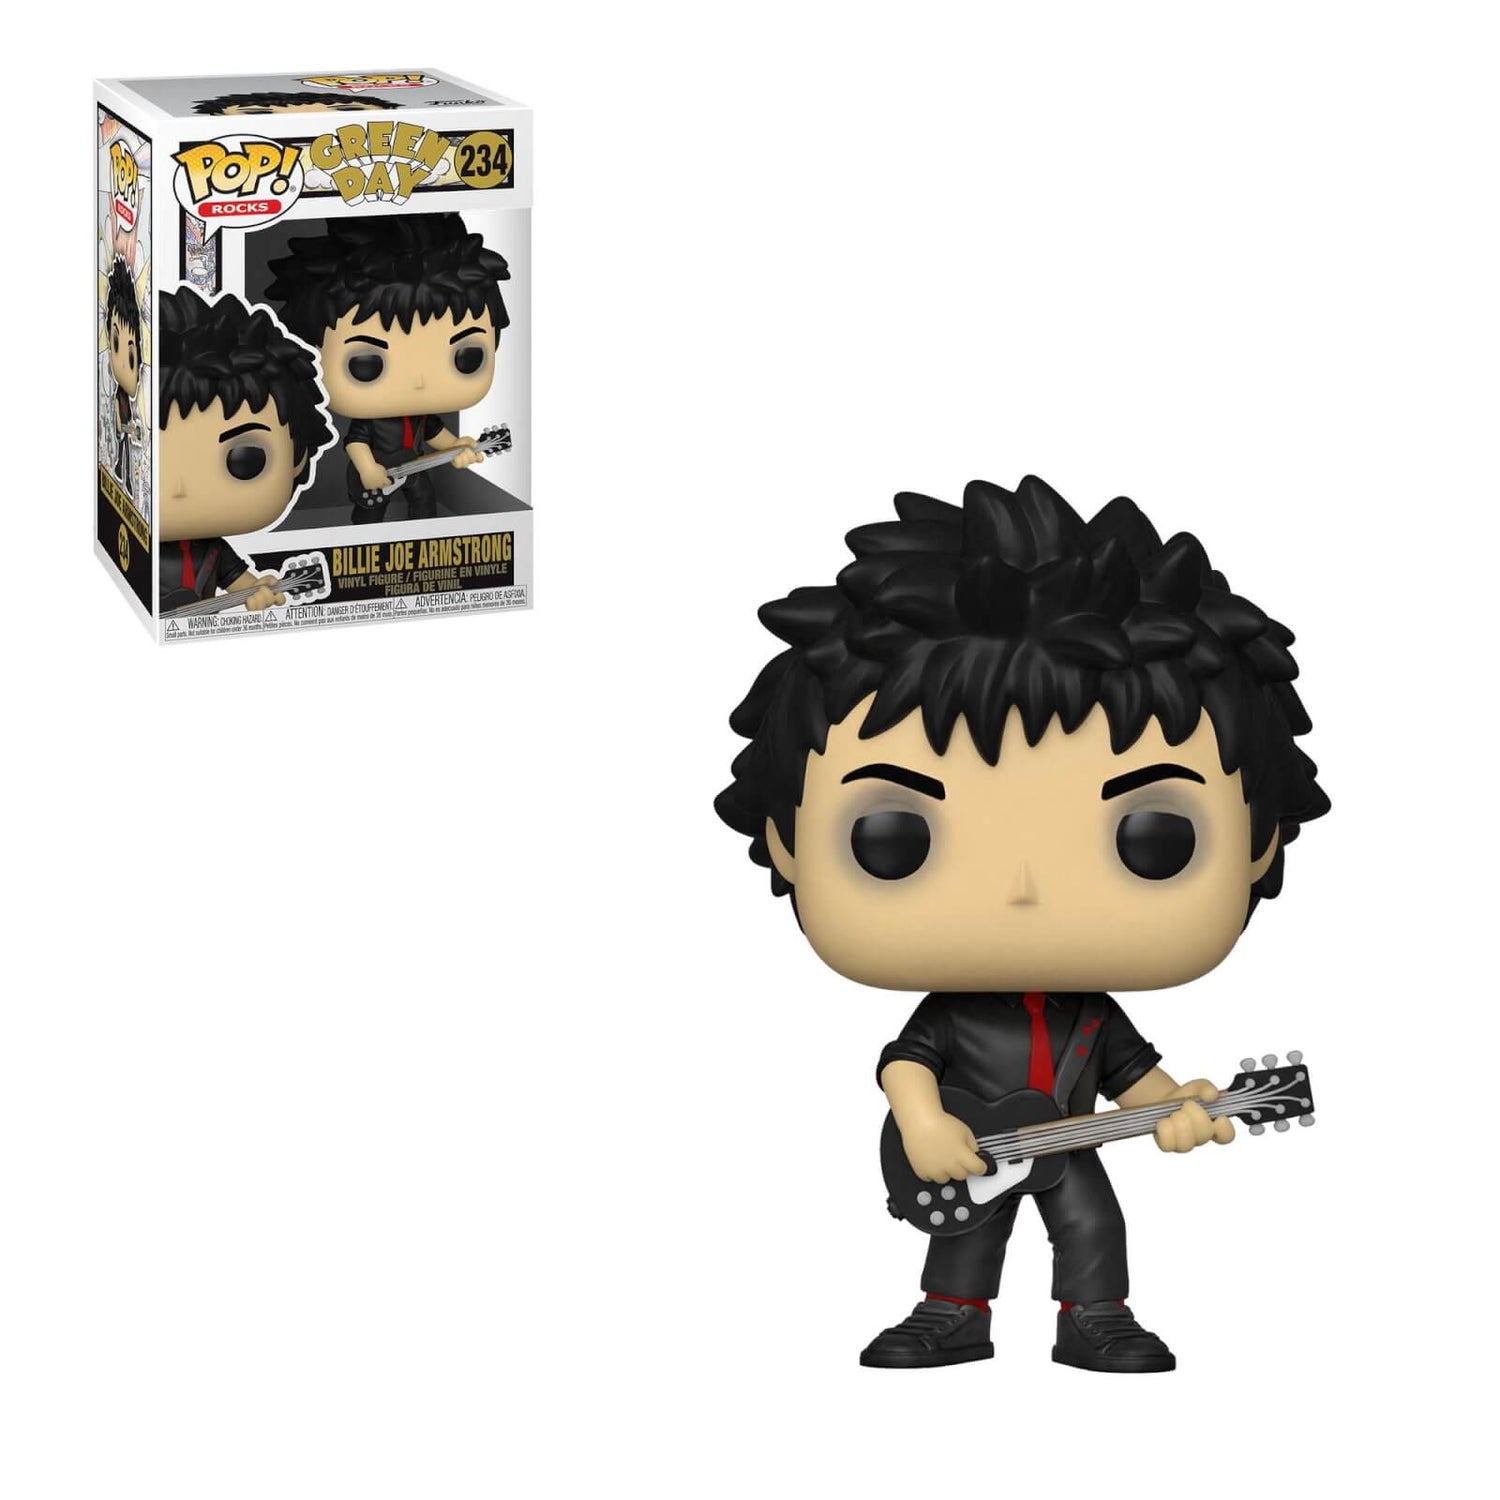 Green Day Billie Joe Armstrong Funko Pop! Vinyl